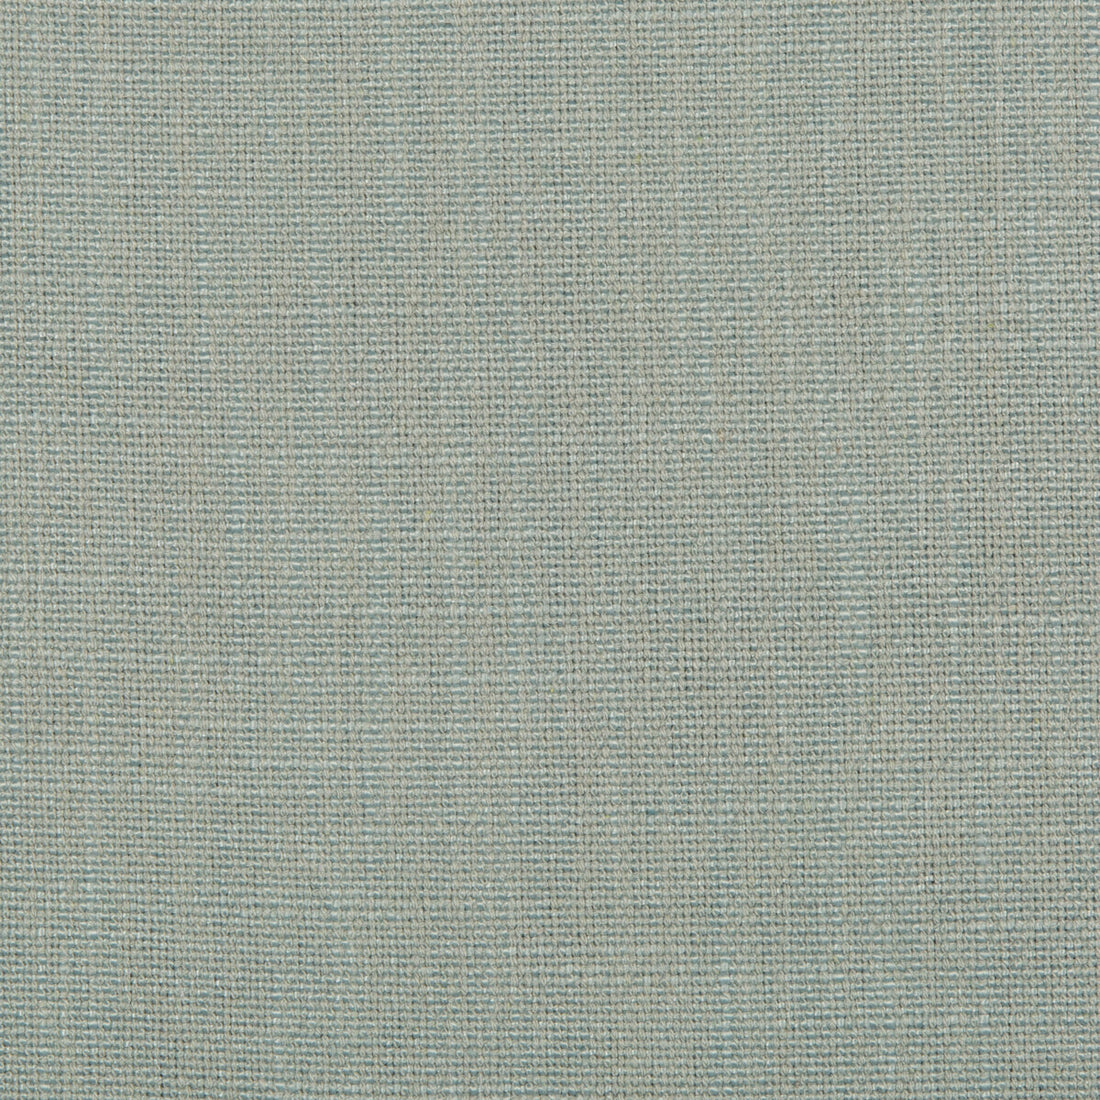 Kravet Smart fabric in 35226-13 color - pattern 35226.13.0 - by Kravet Smart in the Performance Kravetarmor collection